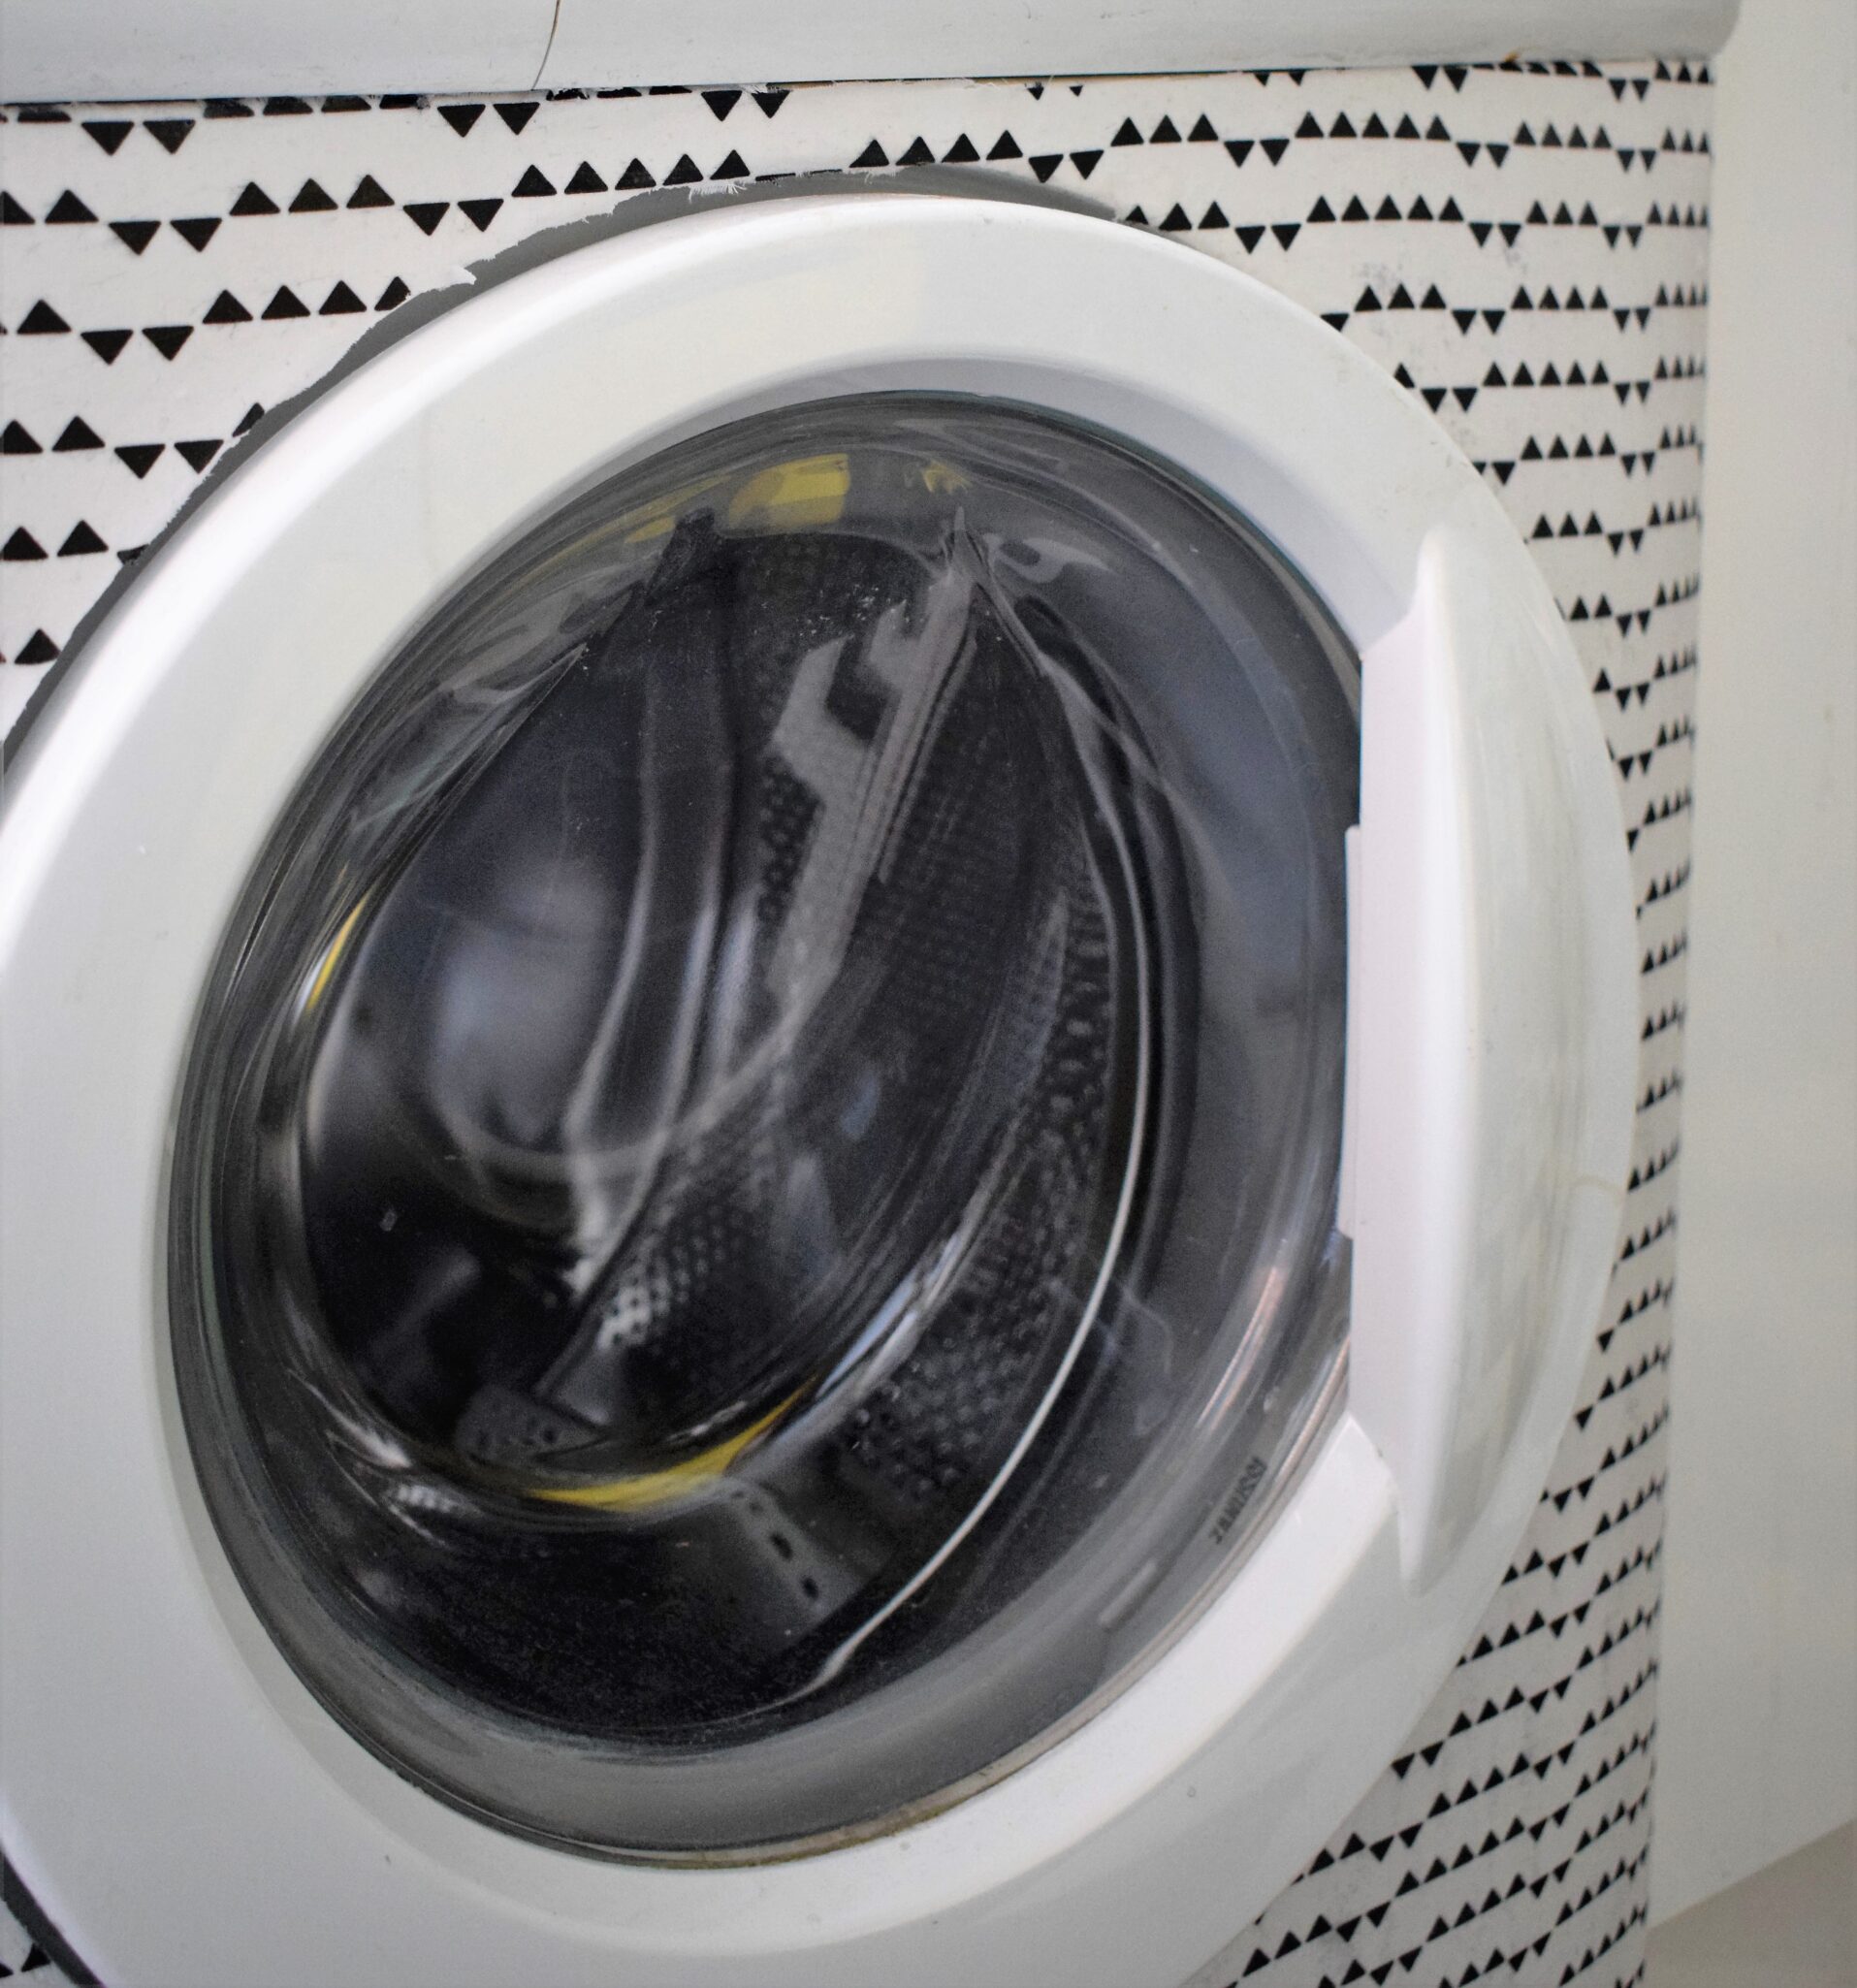 Washing machine makeover with fabric